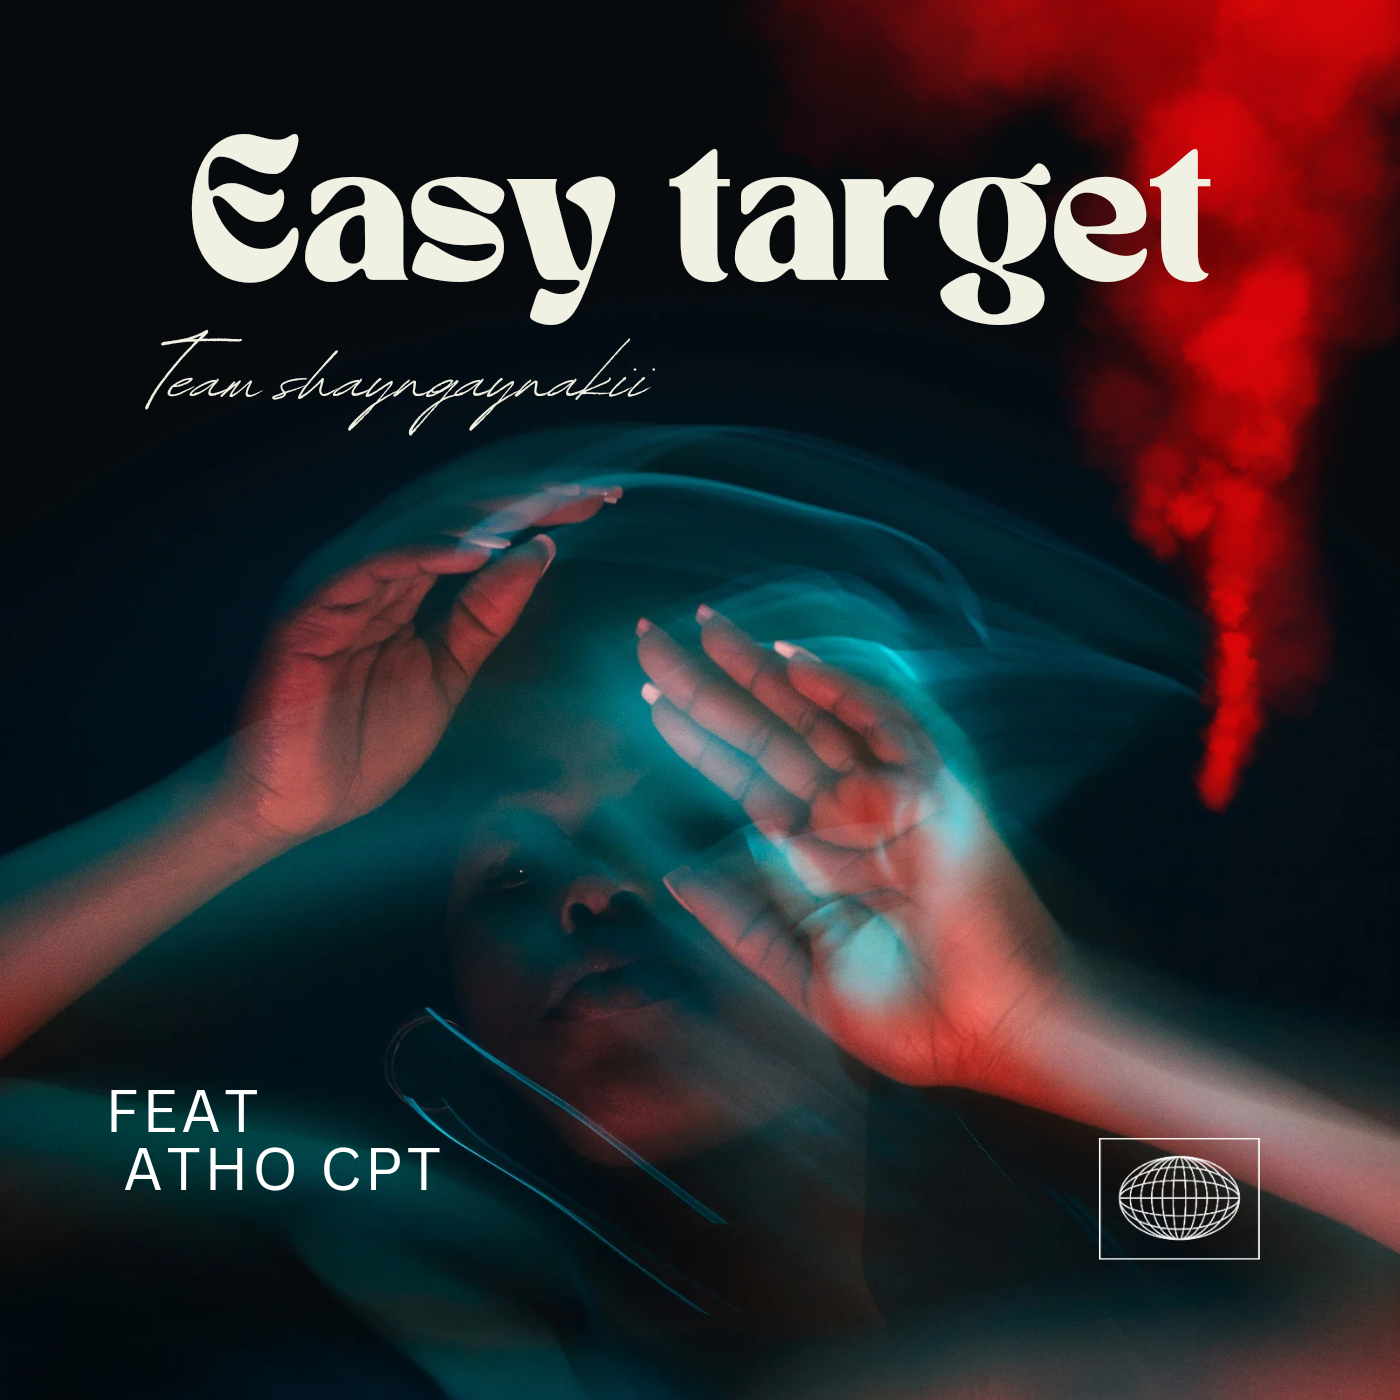 Easy target - Team shayngaynakii ft atho cpt